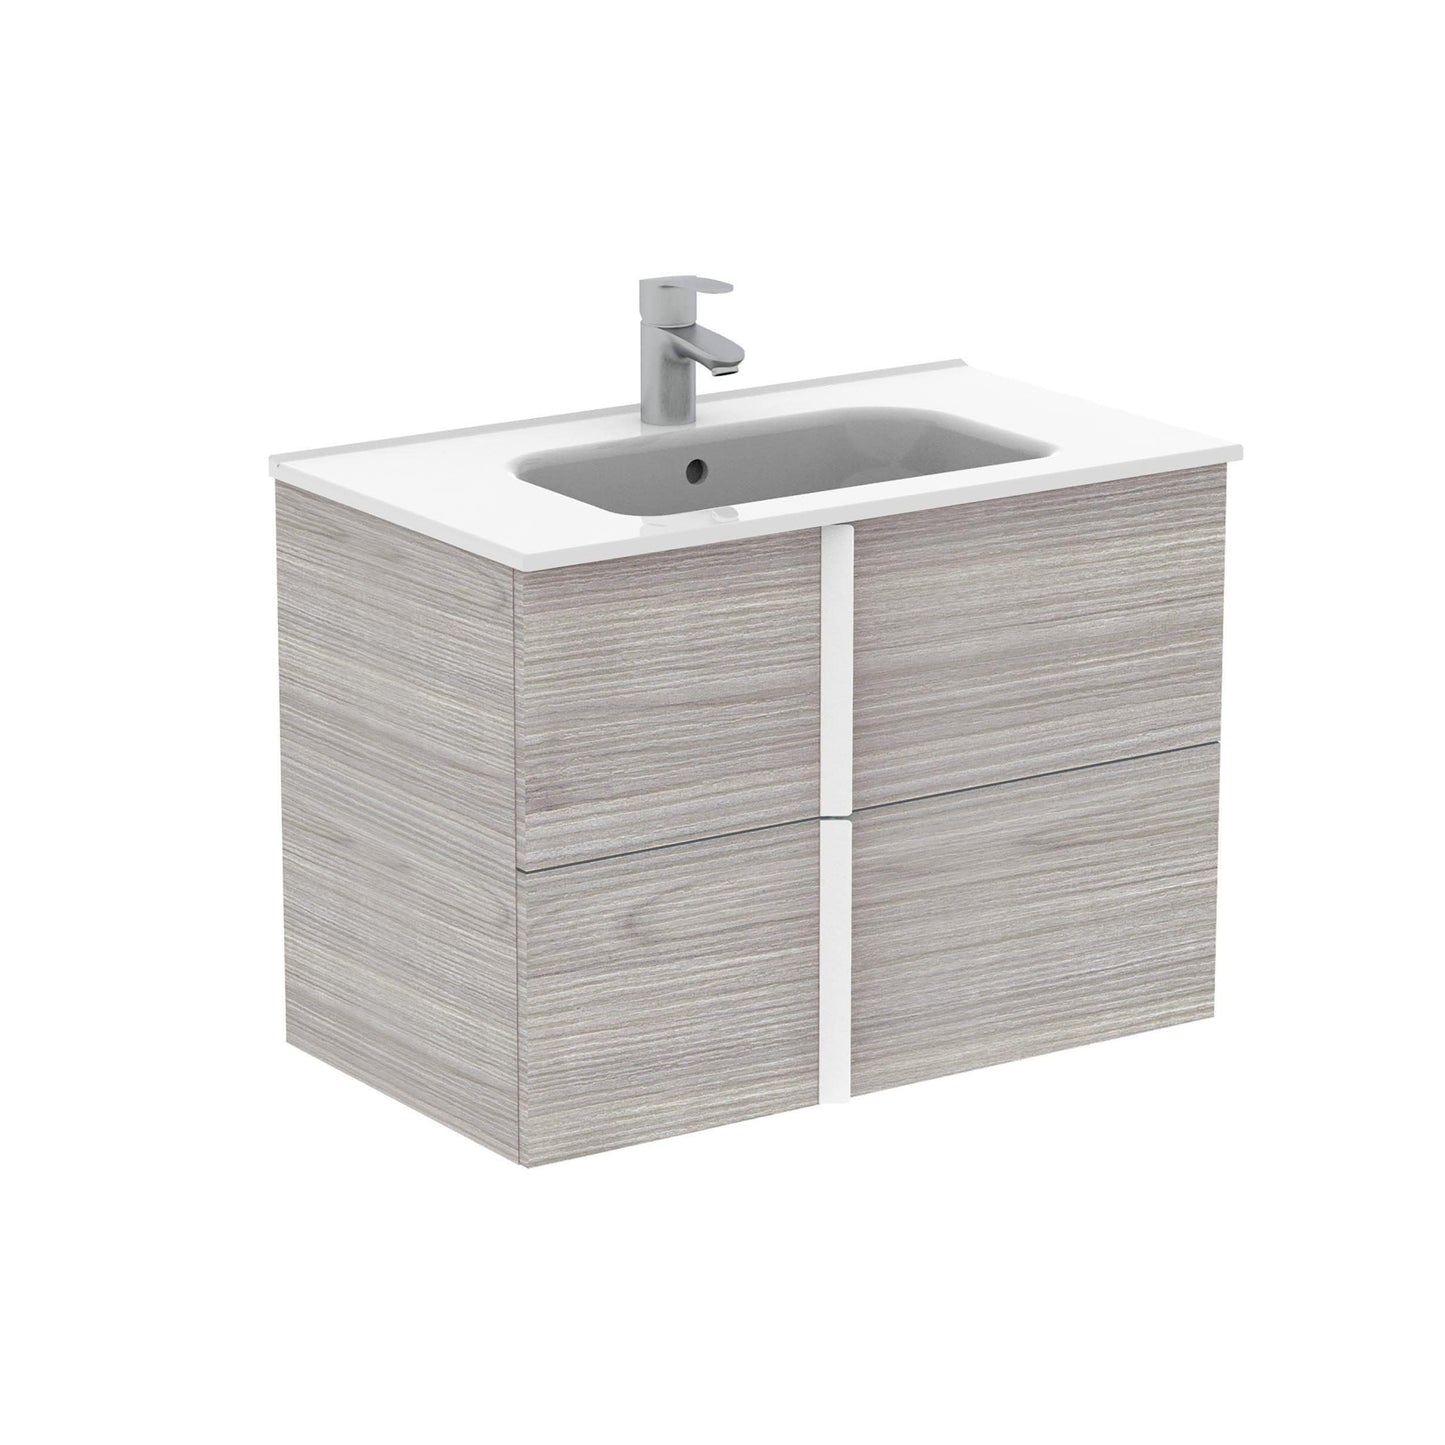 Royo Onix Modern Wall Mounted Bathroom Vanity, 32 Inches, Grey, 2 Drawer with basin